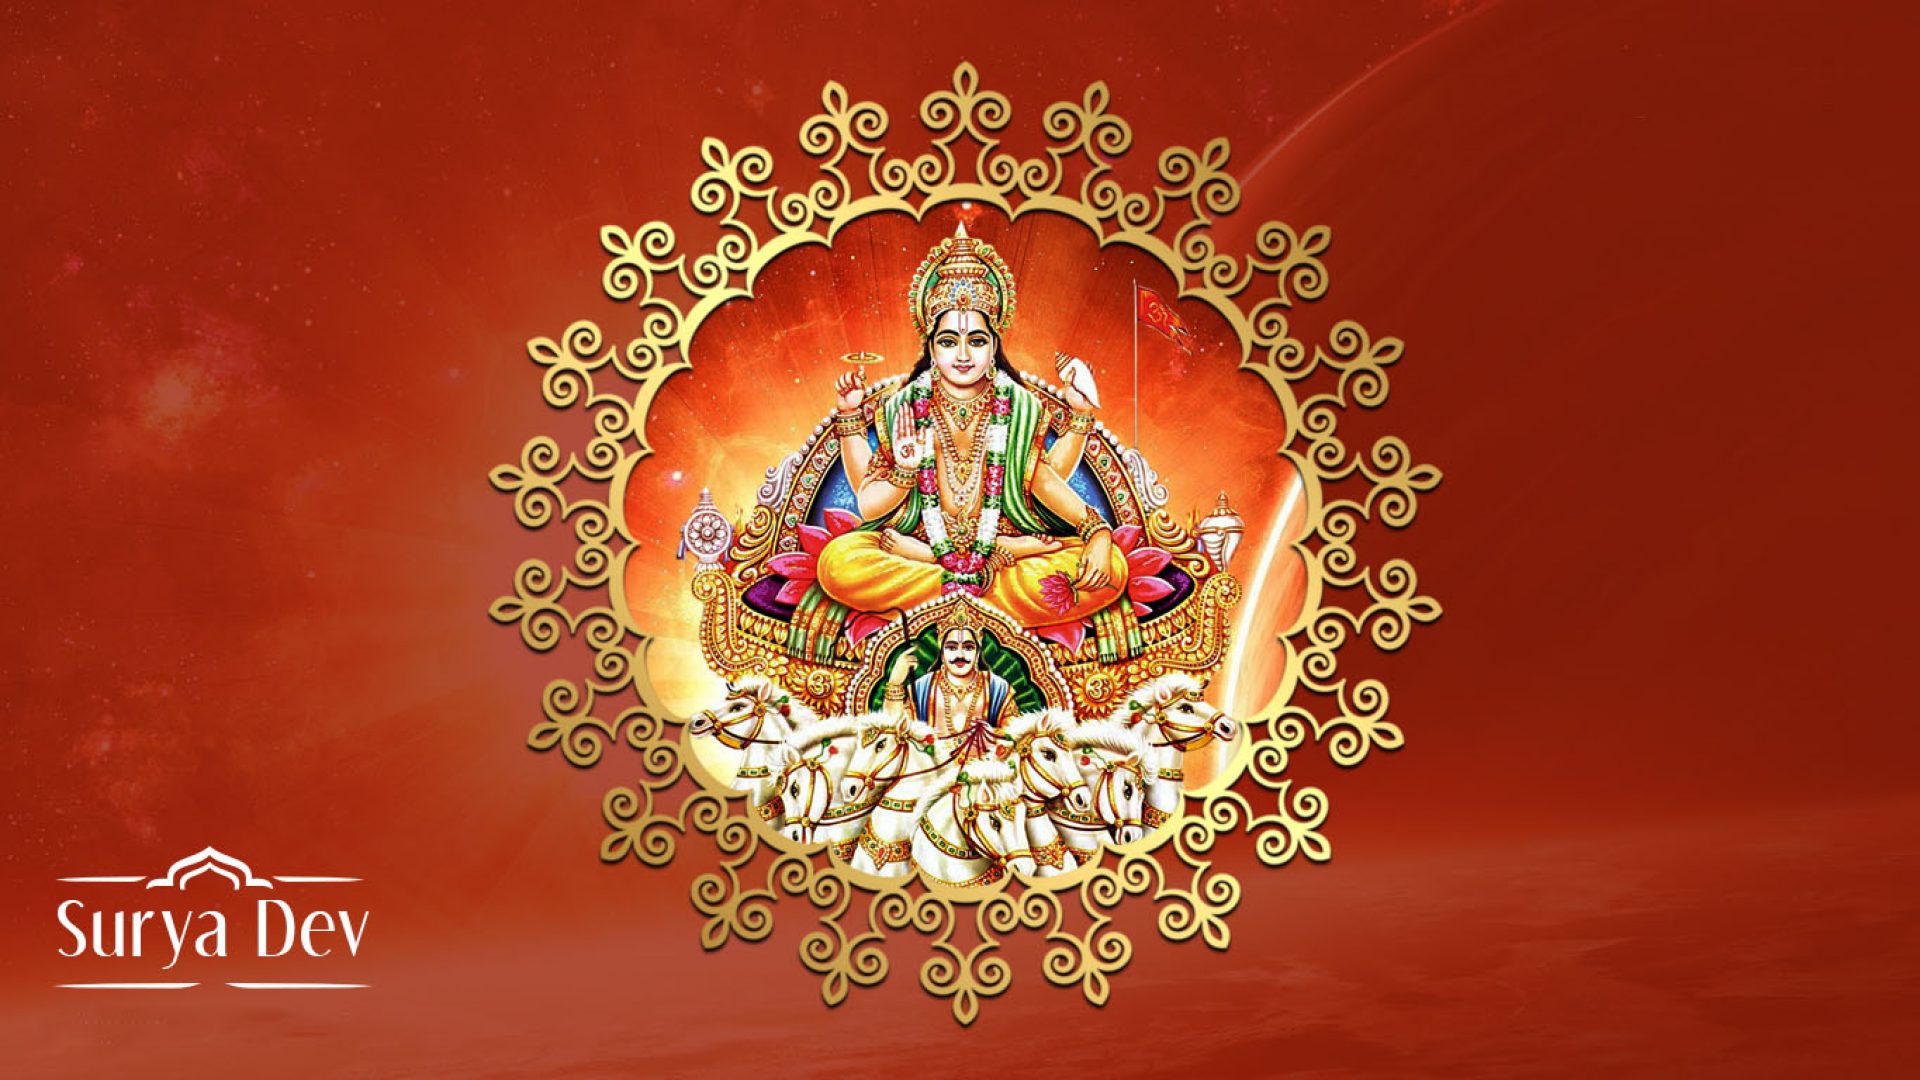 Lord Surya Dev Hd Wallpaper - God HD Wallpapers